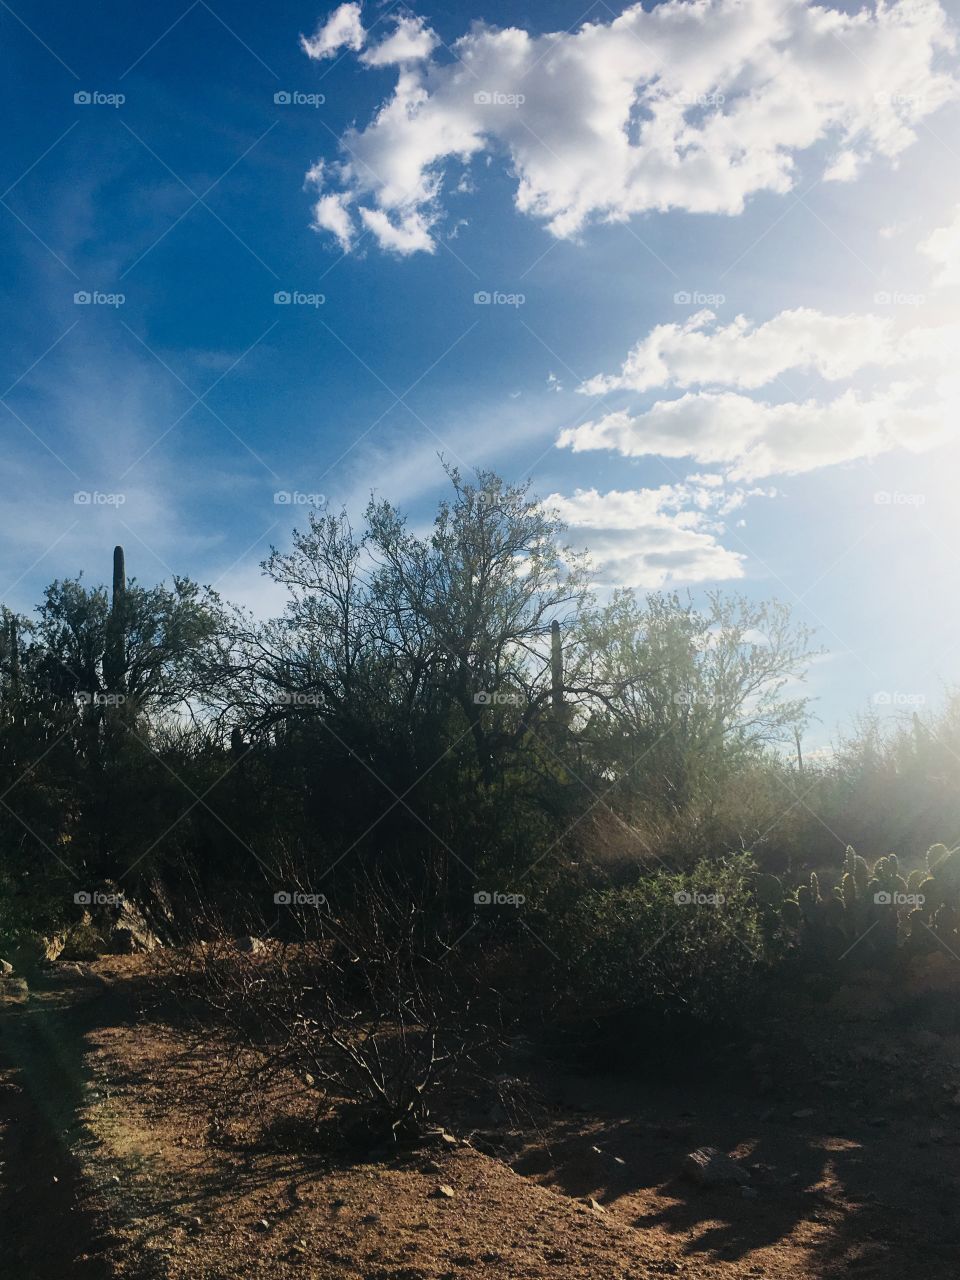 Saguaro National Park, Tucson AZ—hike this desert trail to melt the stress away, enjoy the silence